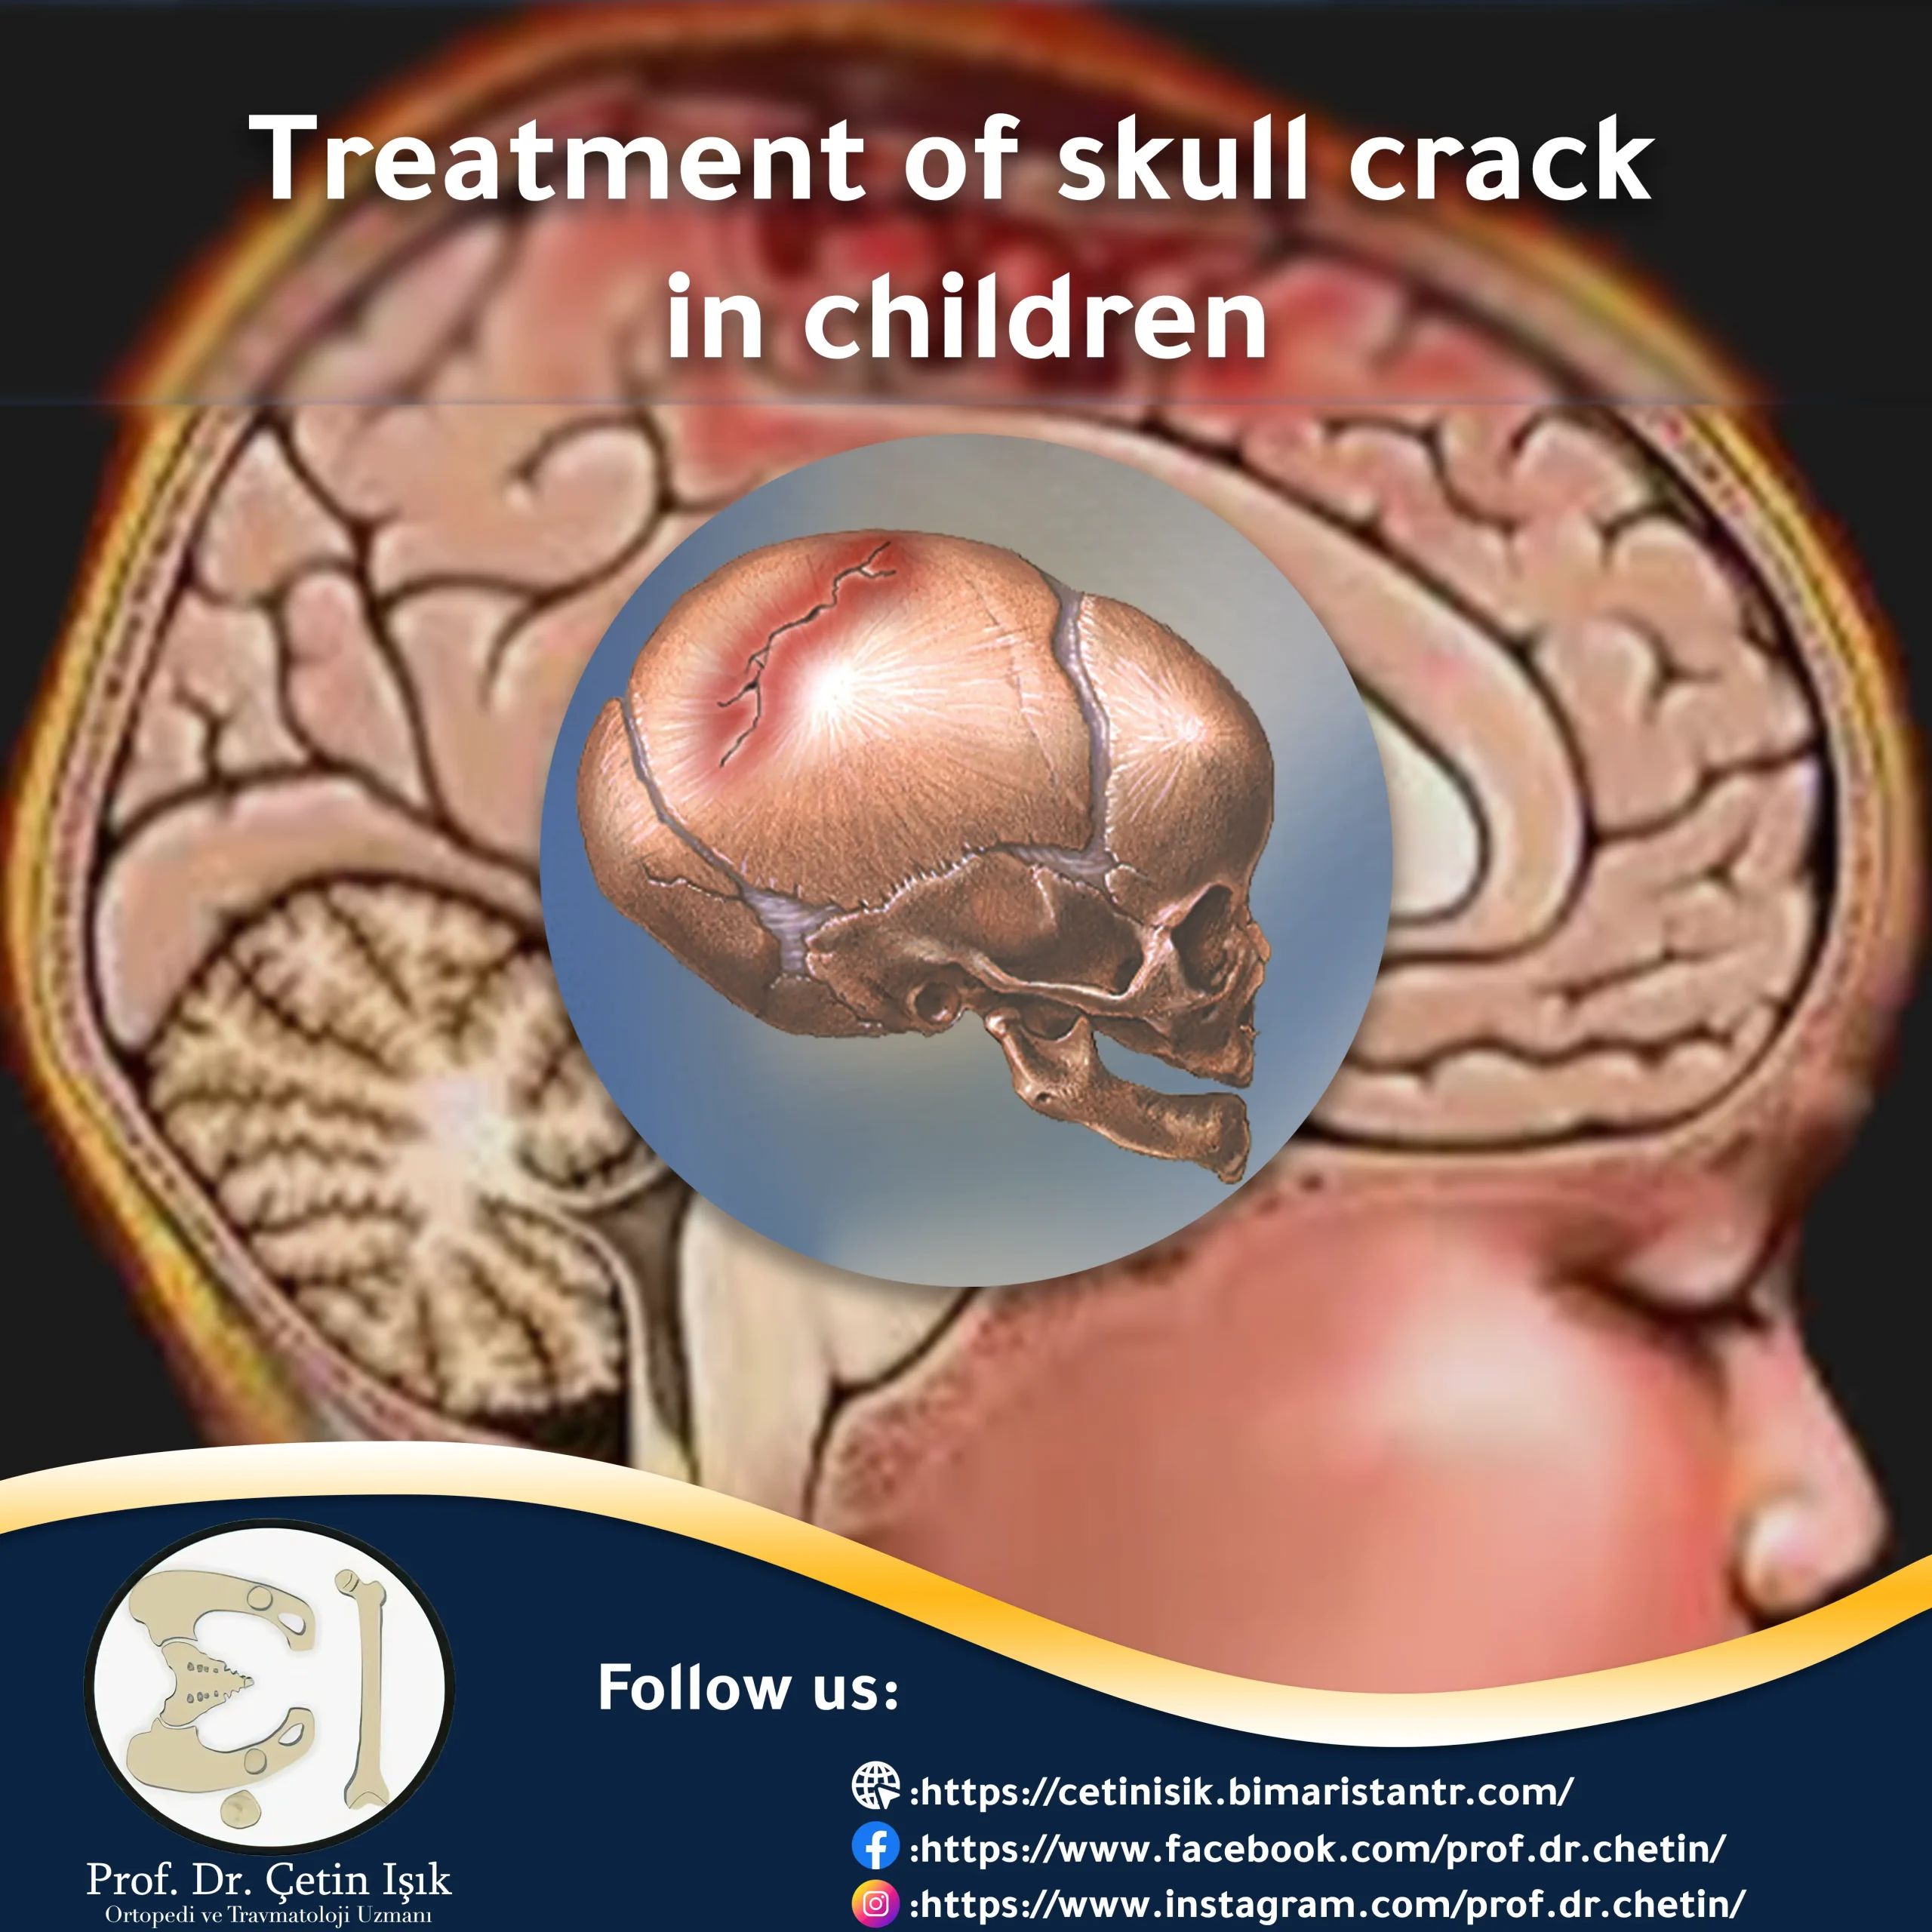 Treatment of skull fracture in children in detail